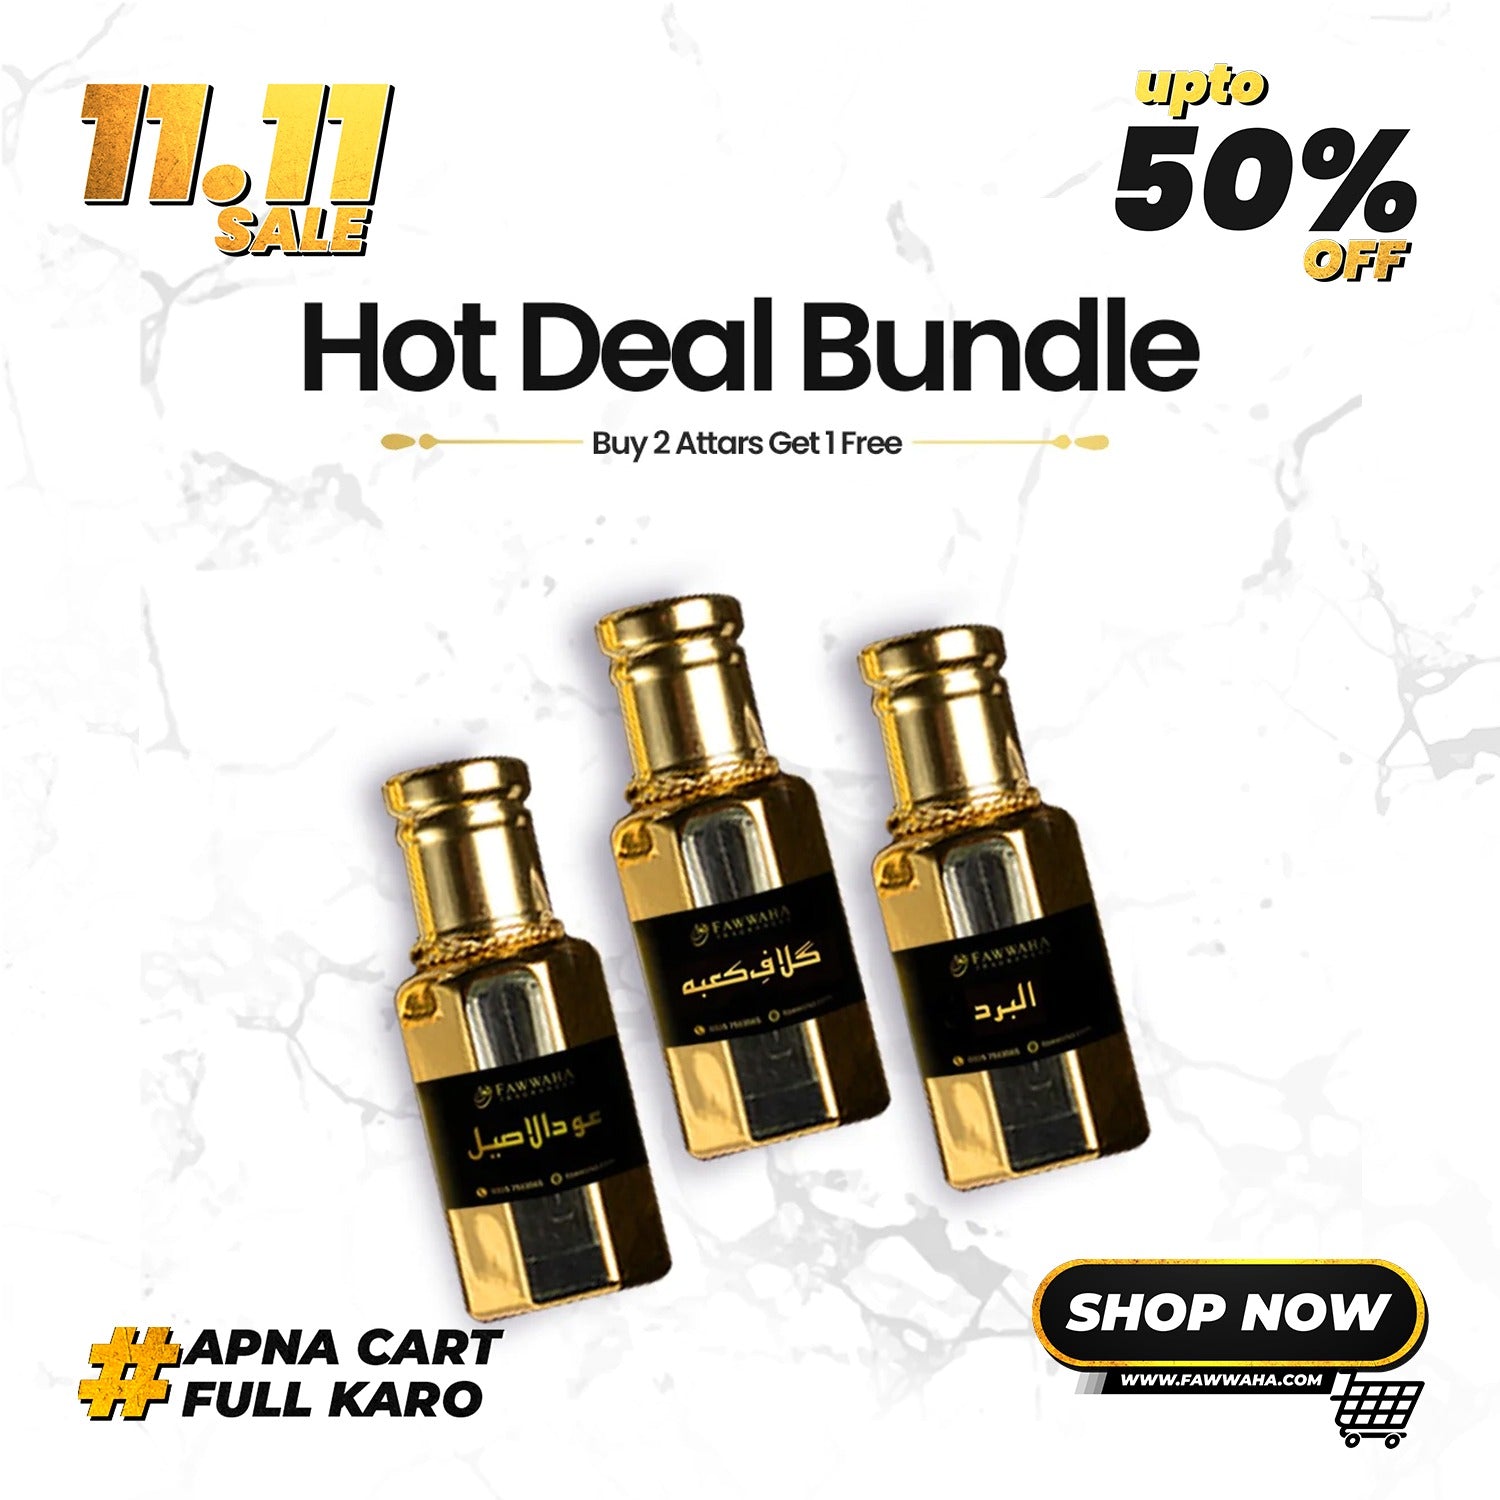 Hot Deal Bundle (Buy 2 Get 1 Free)